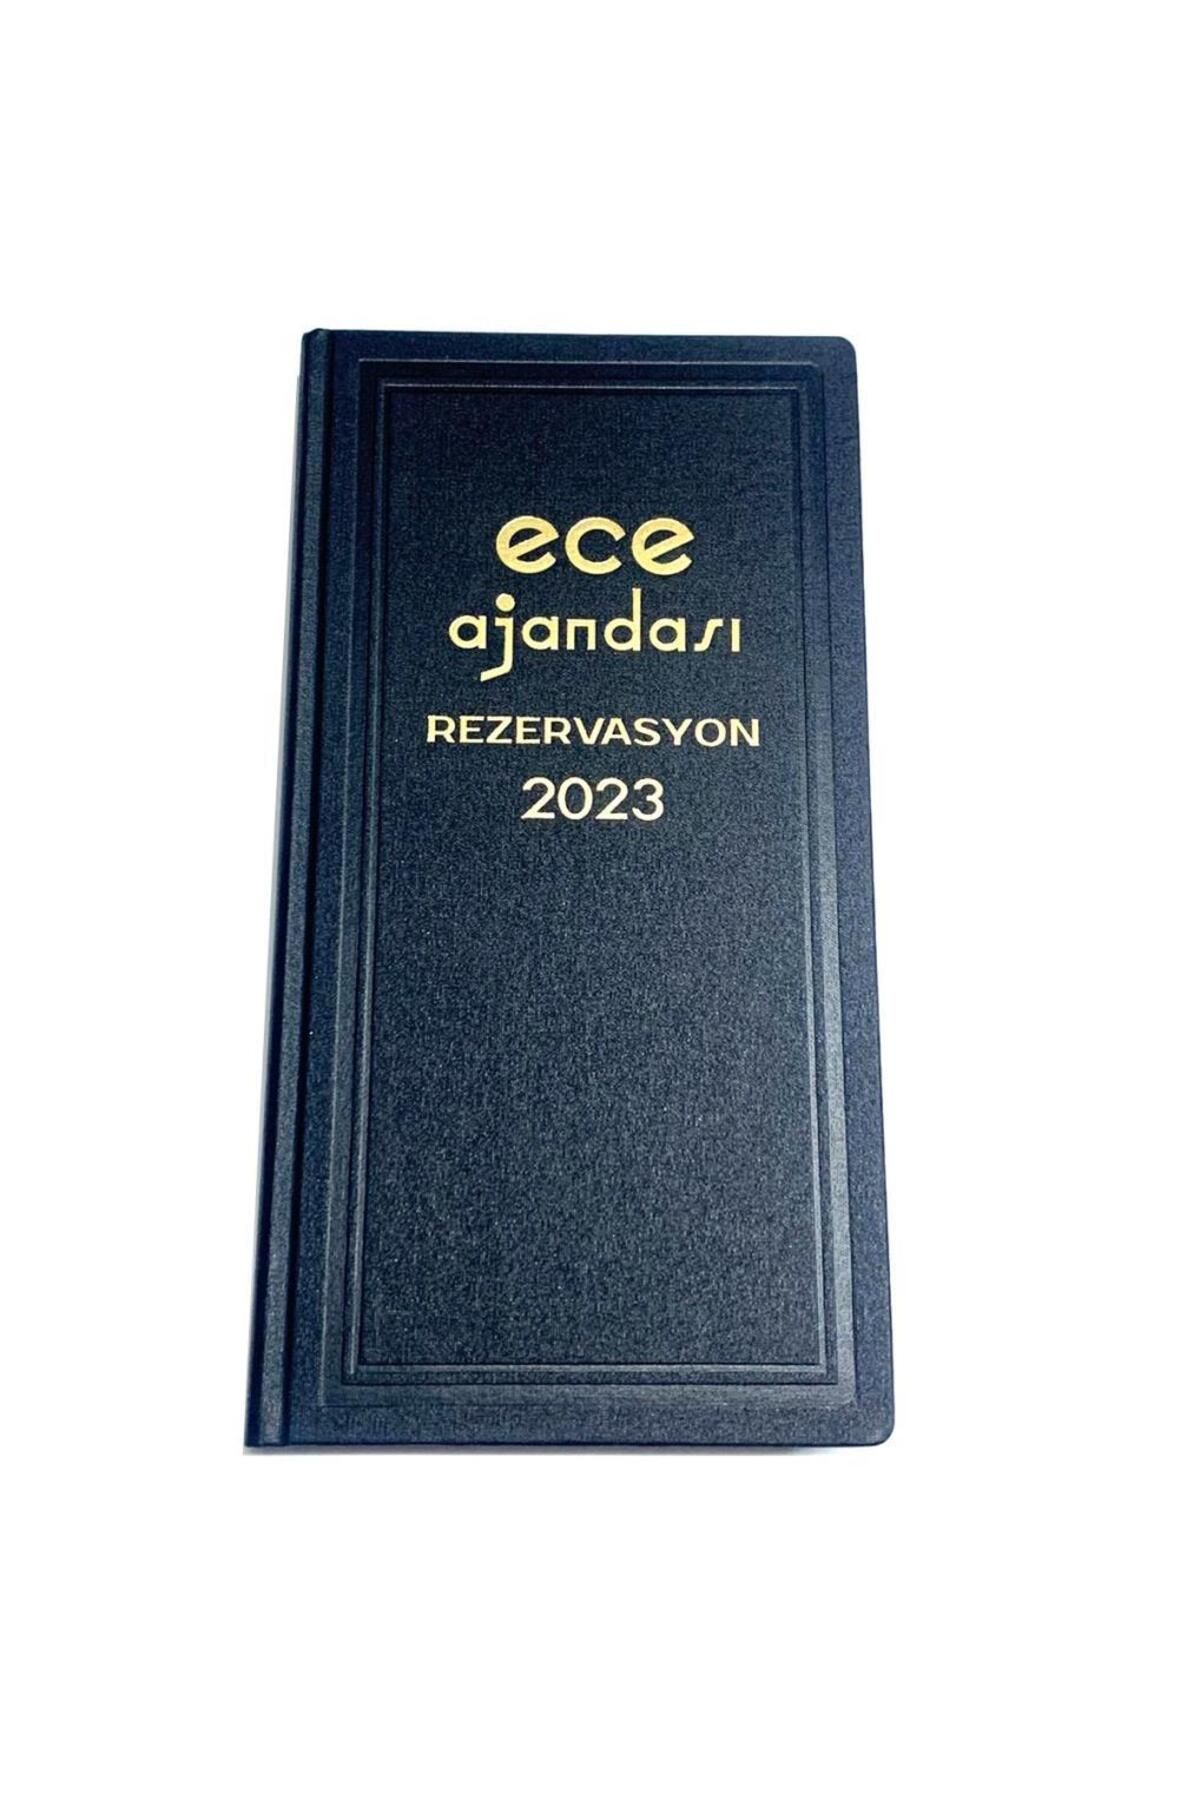 Ece 2024 Agenda Eurasia Reservation 17x33 Cm Commercial Agenda